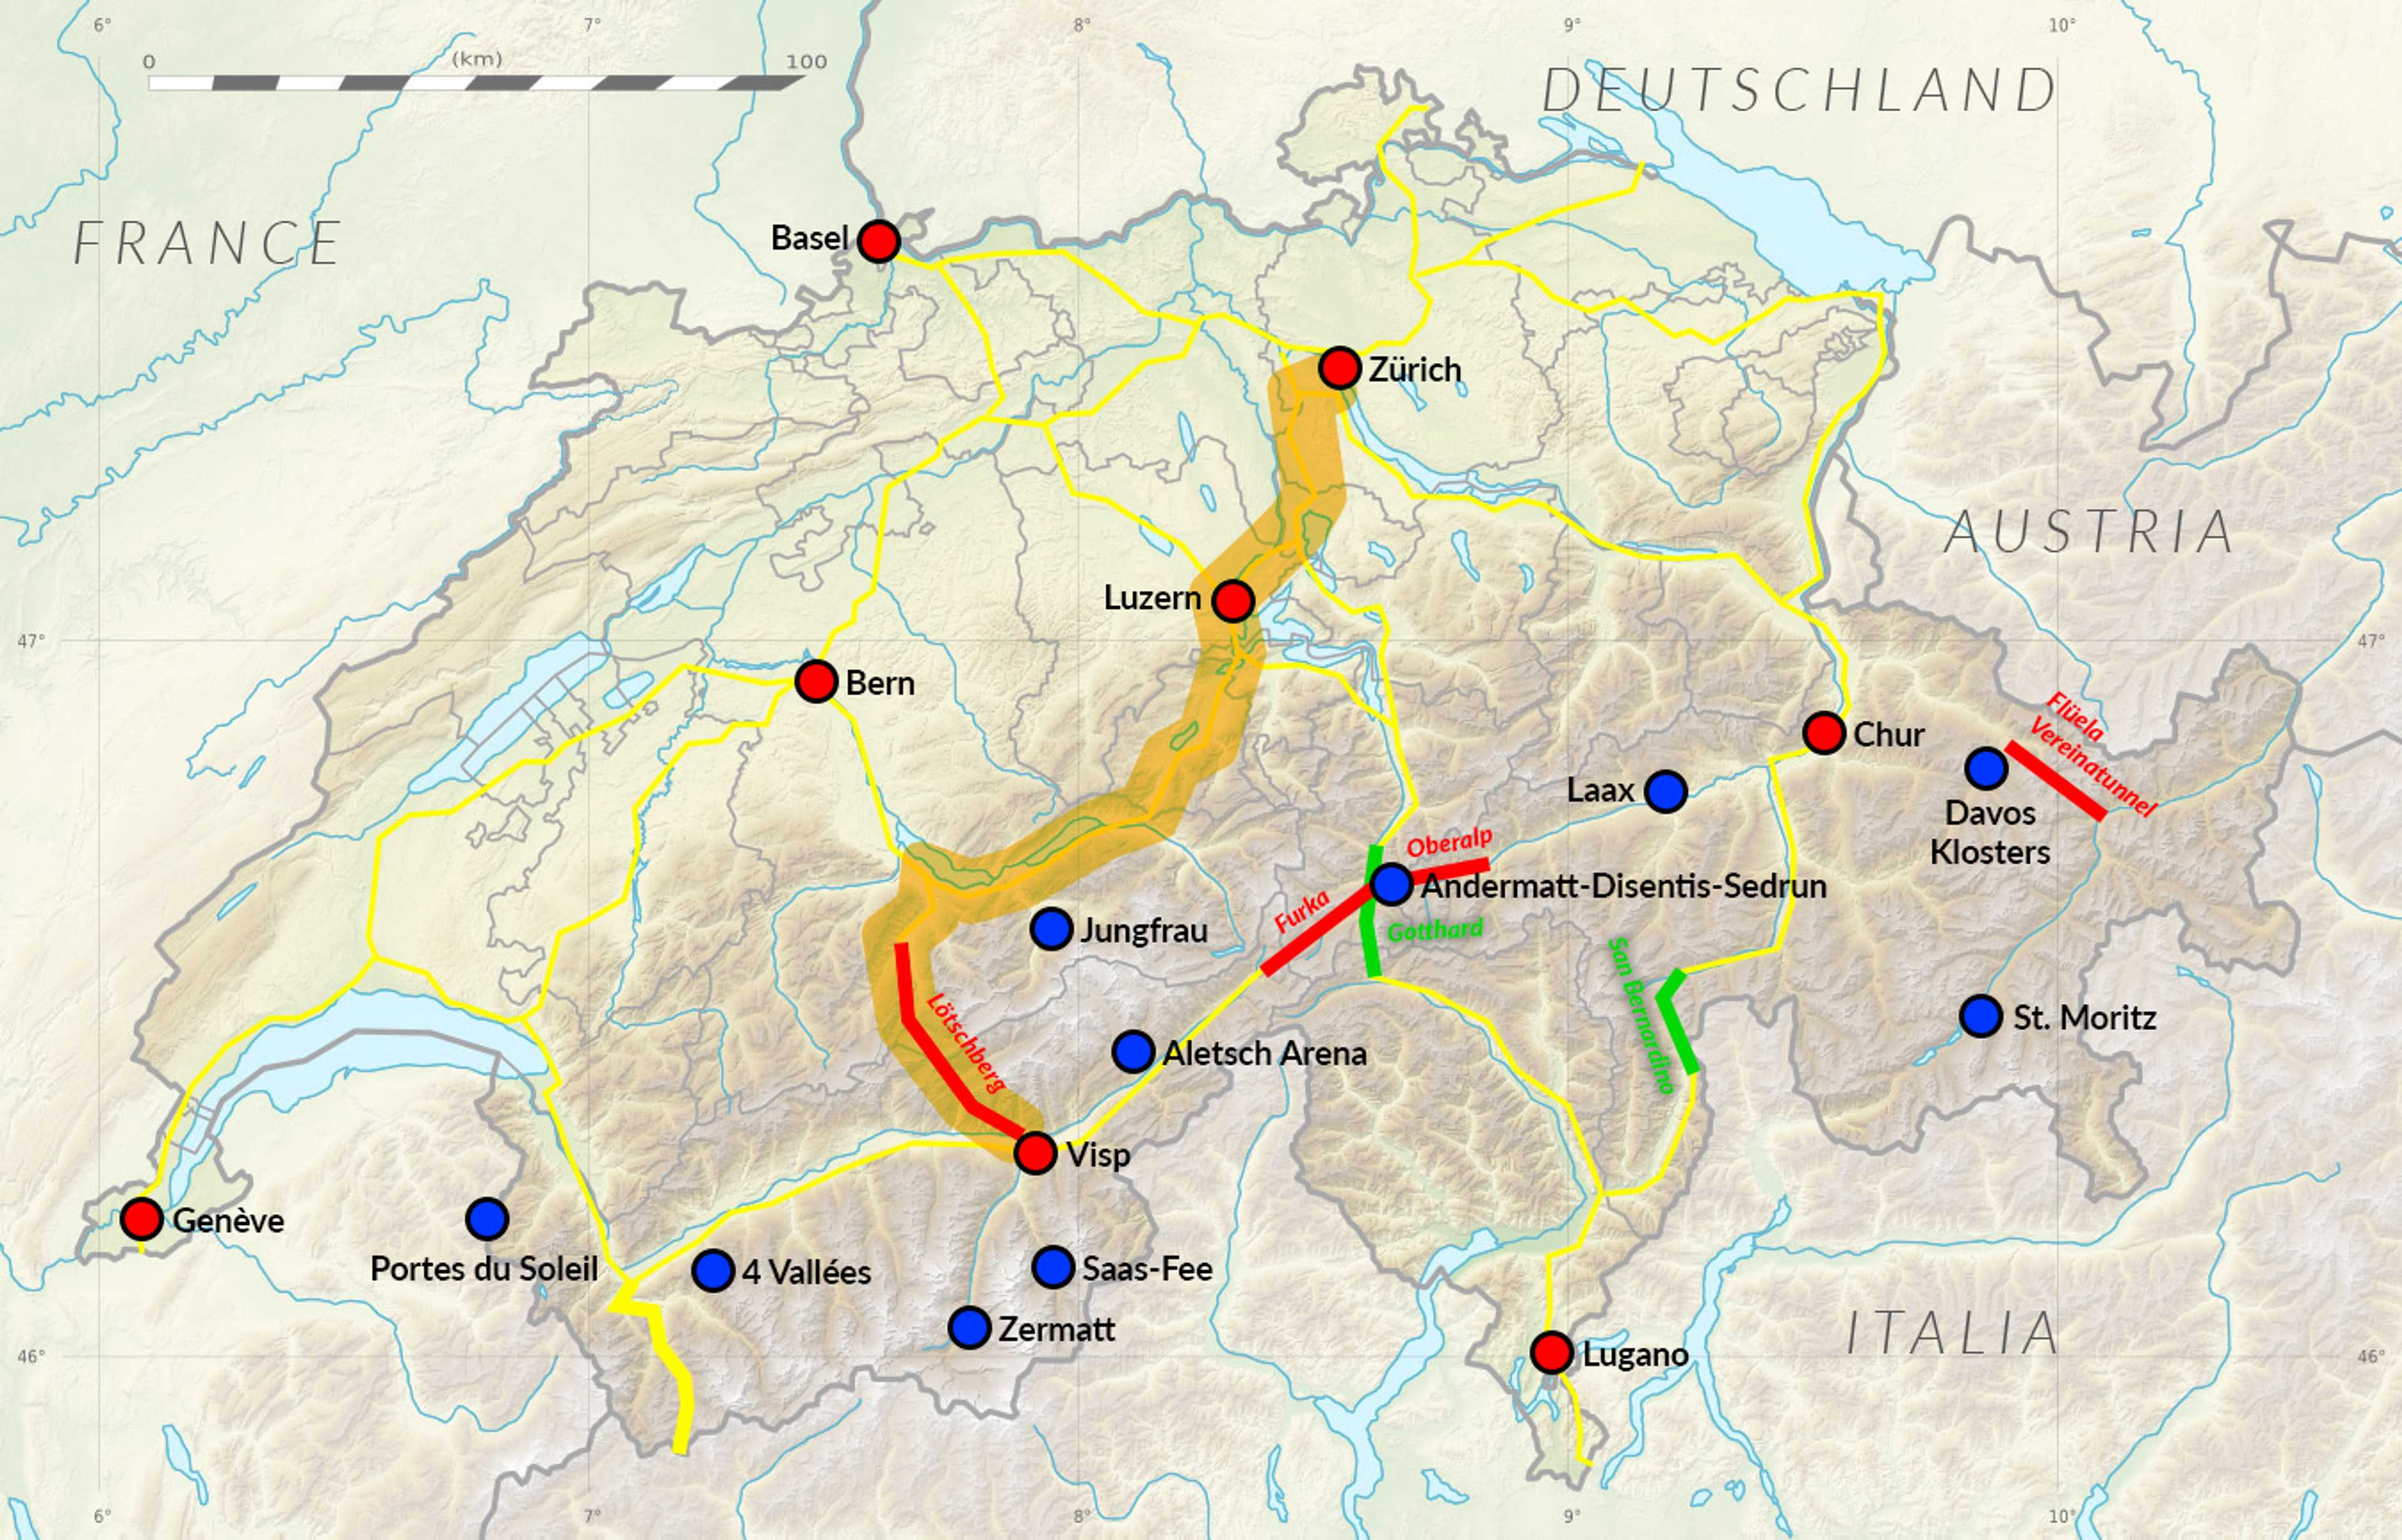 Zürich-Visp, wariant 3: przez Lucernę i z transportem pociągiem tunelem Lötschberg